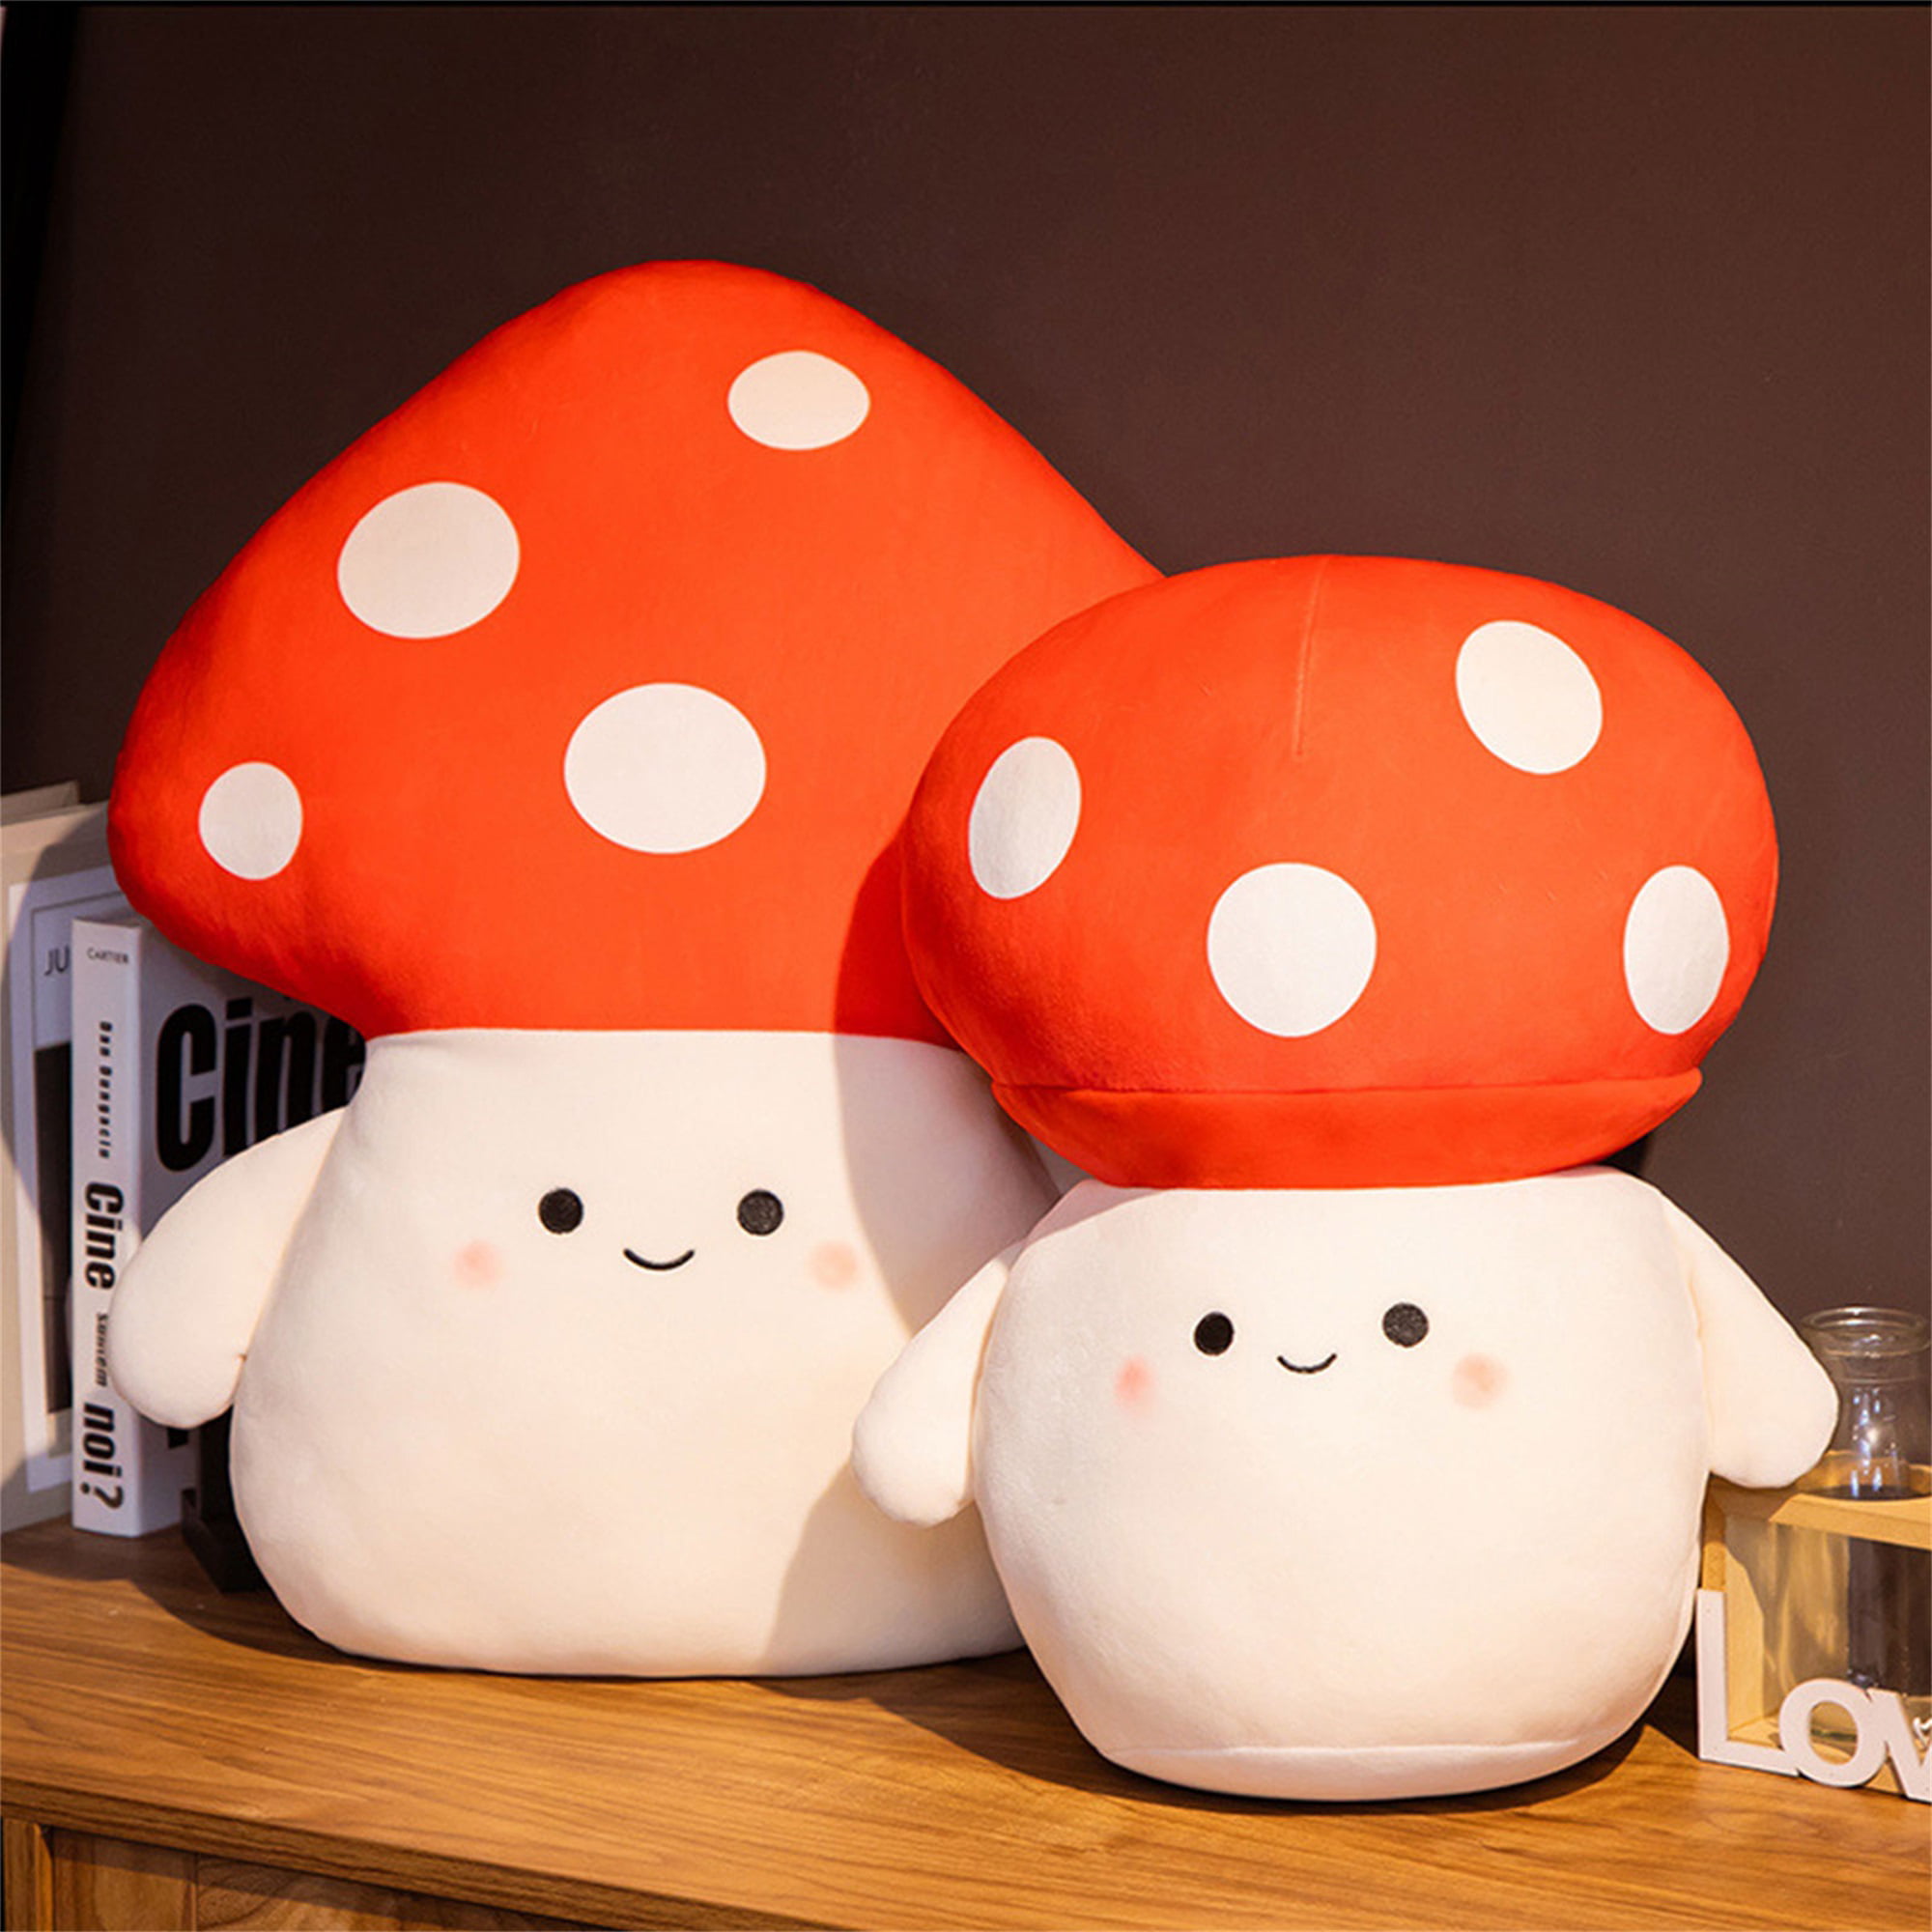  MMguai 12.6 Mushroom Stuffed Animal,Cute Big Mushroom Squishy  Soft Pillow plushies, Room Decor Plush Toy Doll Gifts for Kids  Birthday,Valentine,Christmas : Toys & Games